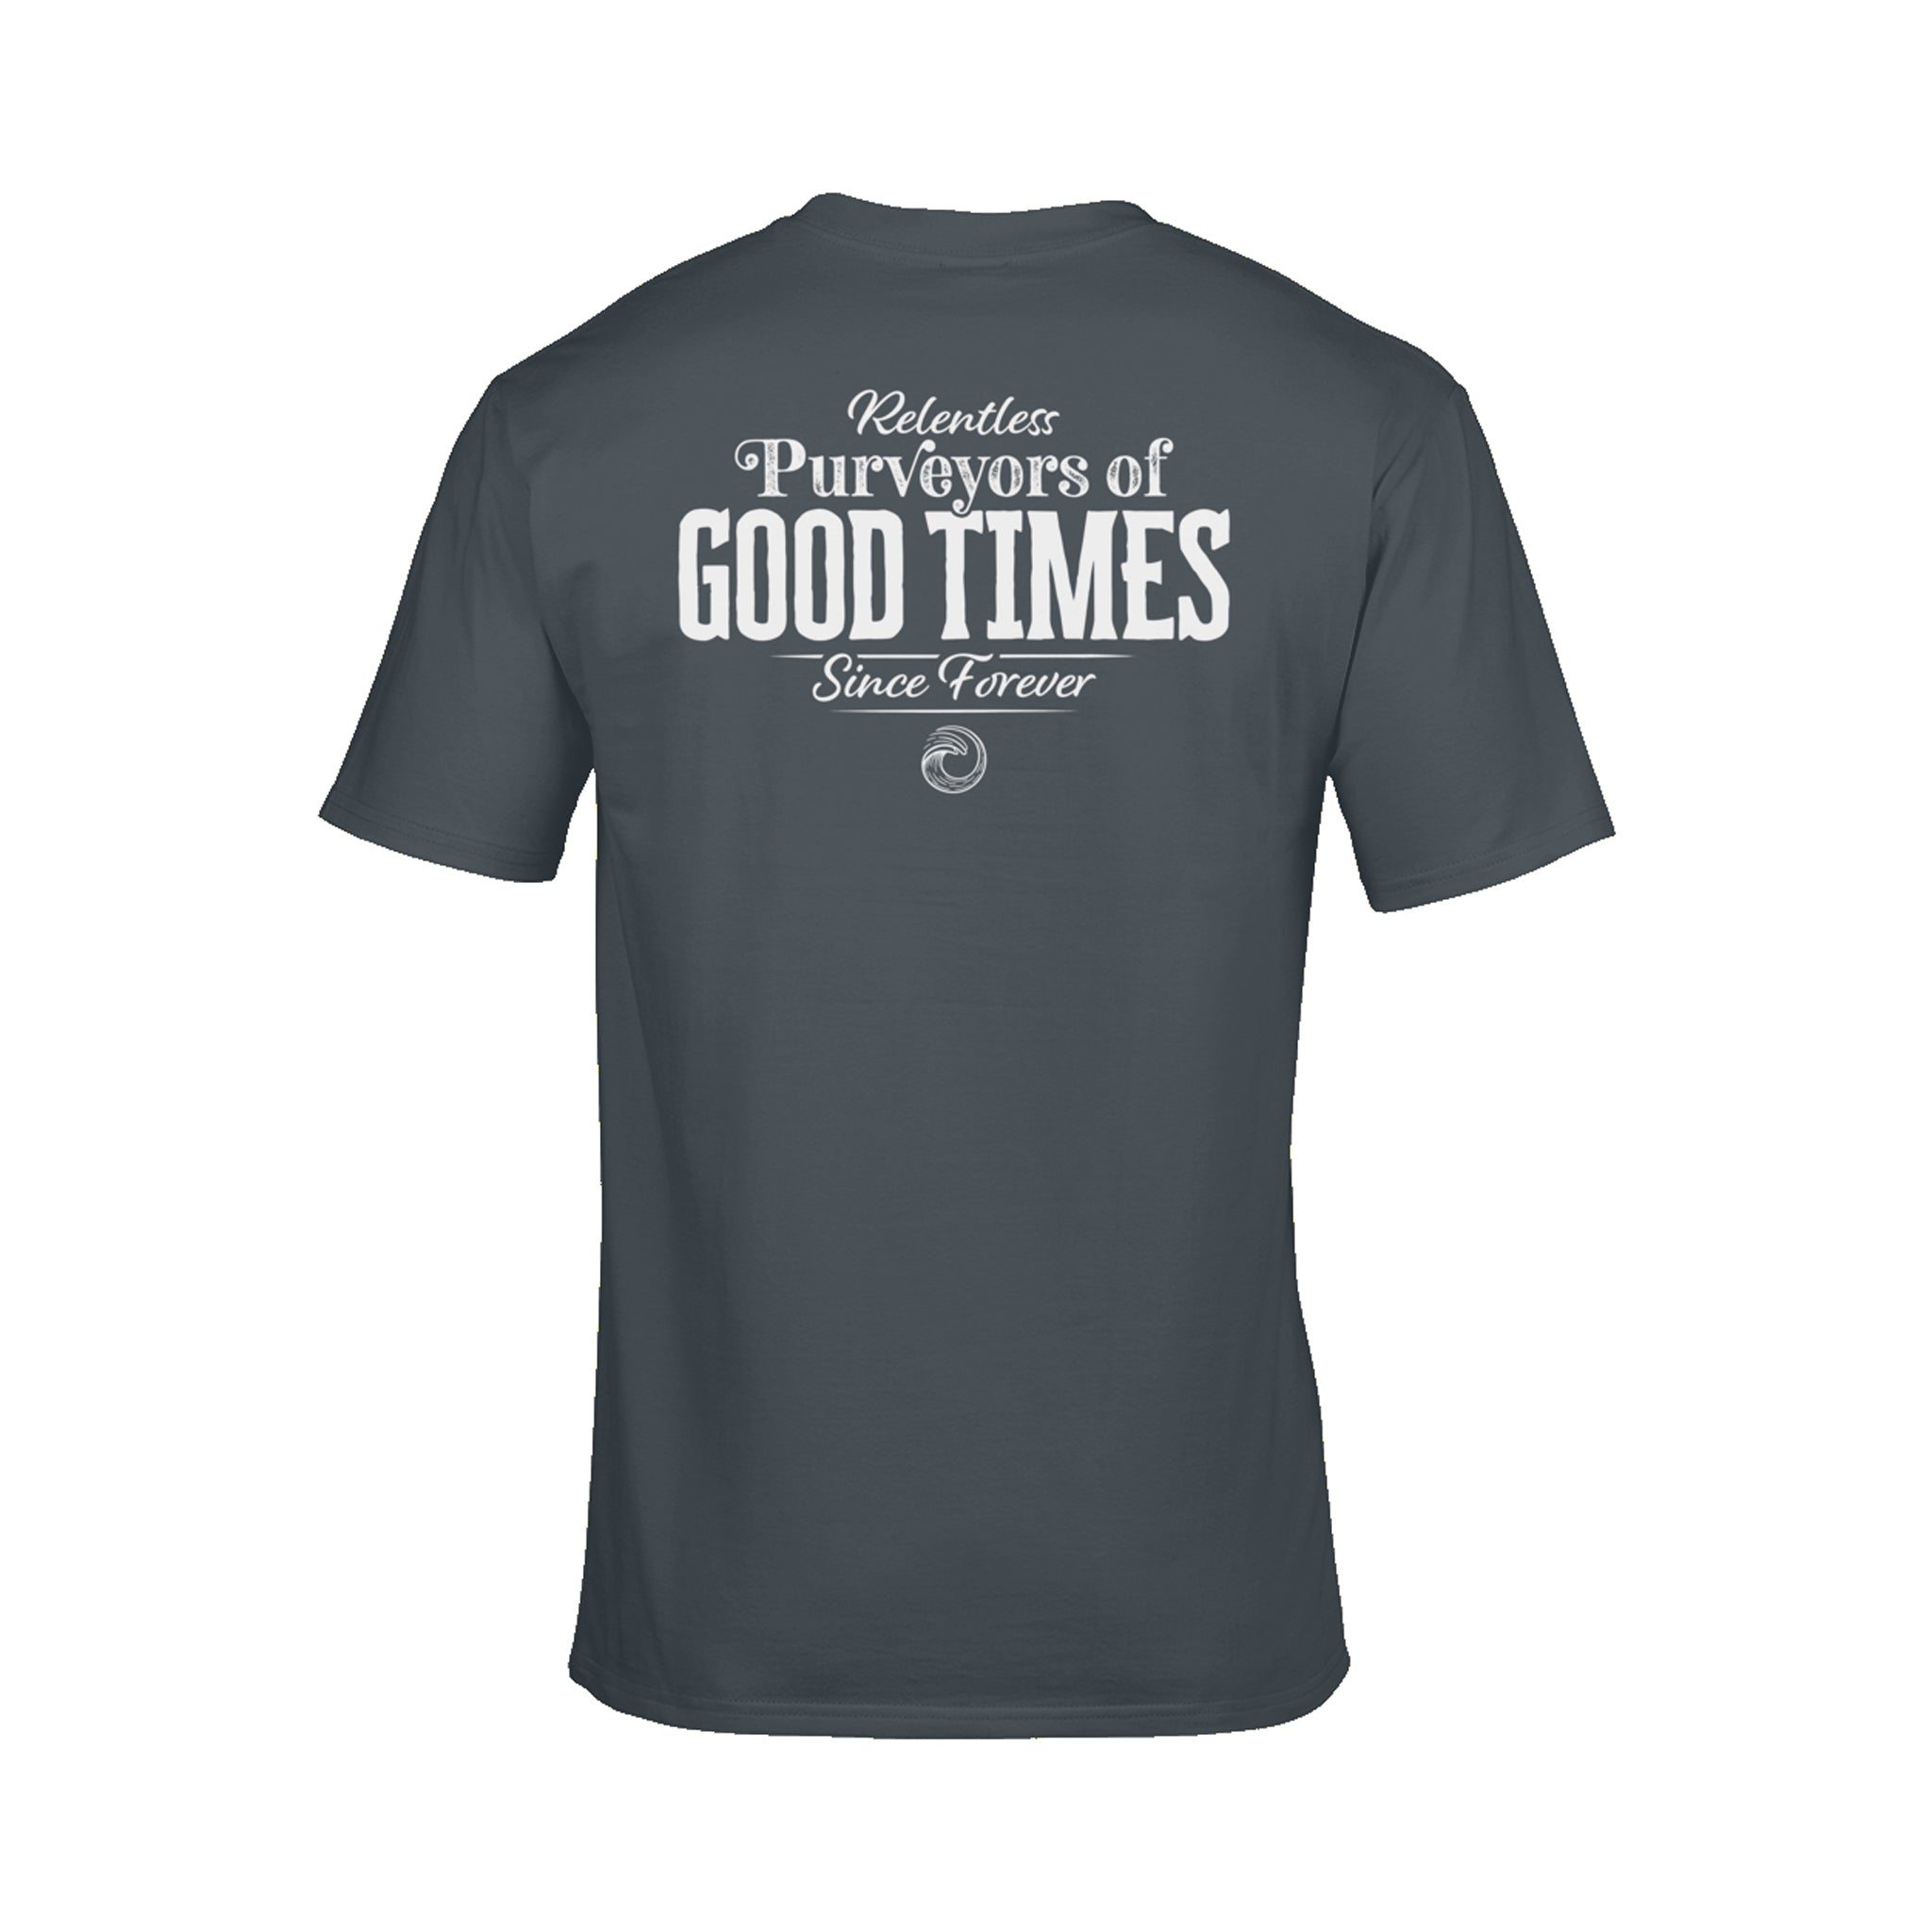 'Good Times' Mens T-Shirt